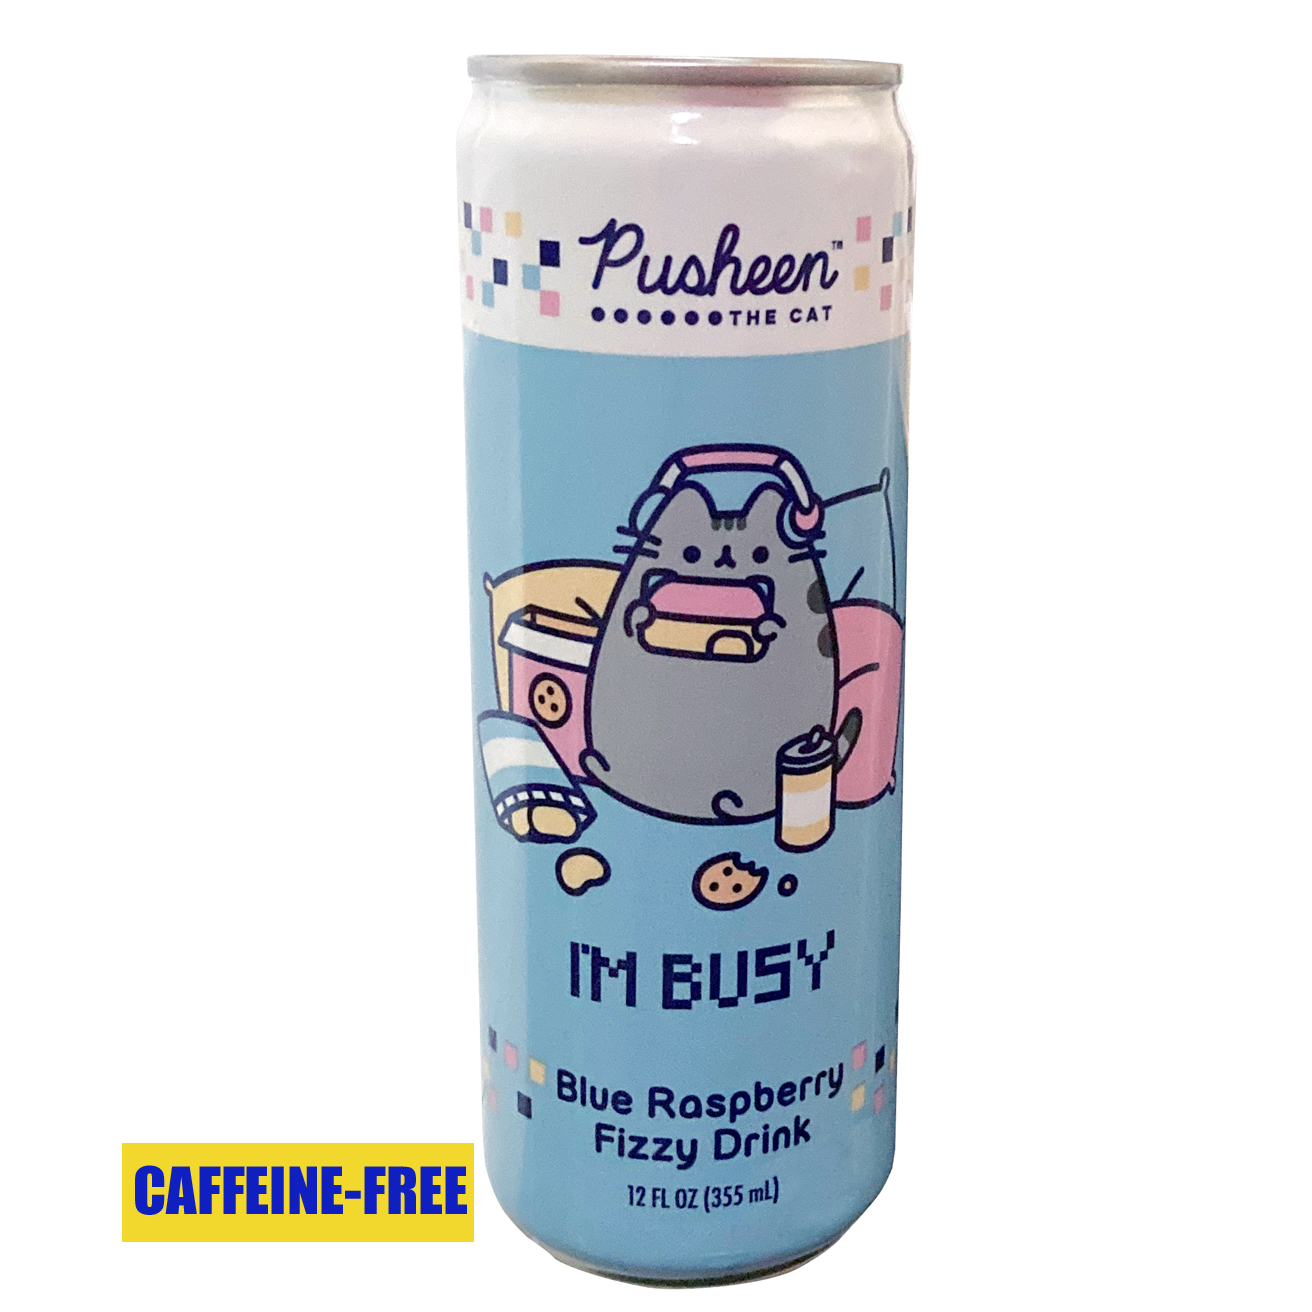 I'm Busy Blue Raspberry Fizzy Drink - Boston America Corp.